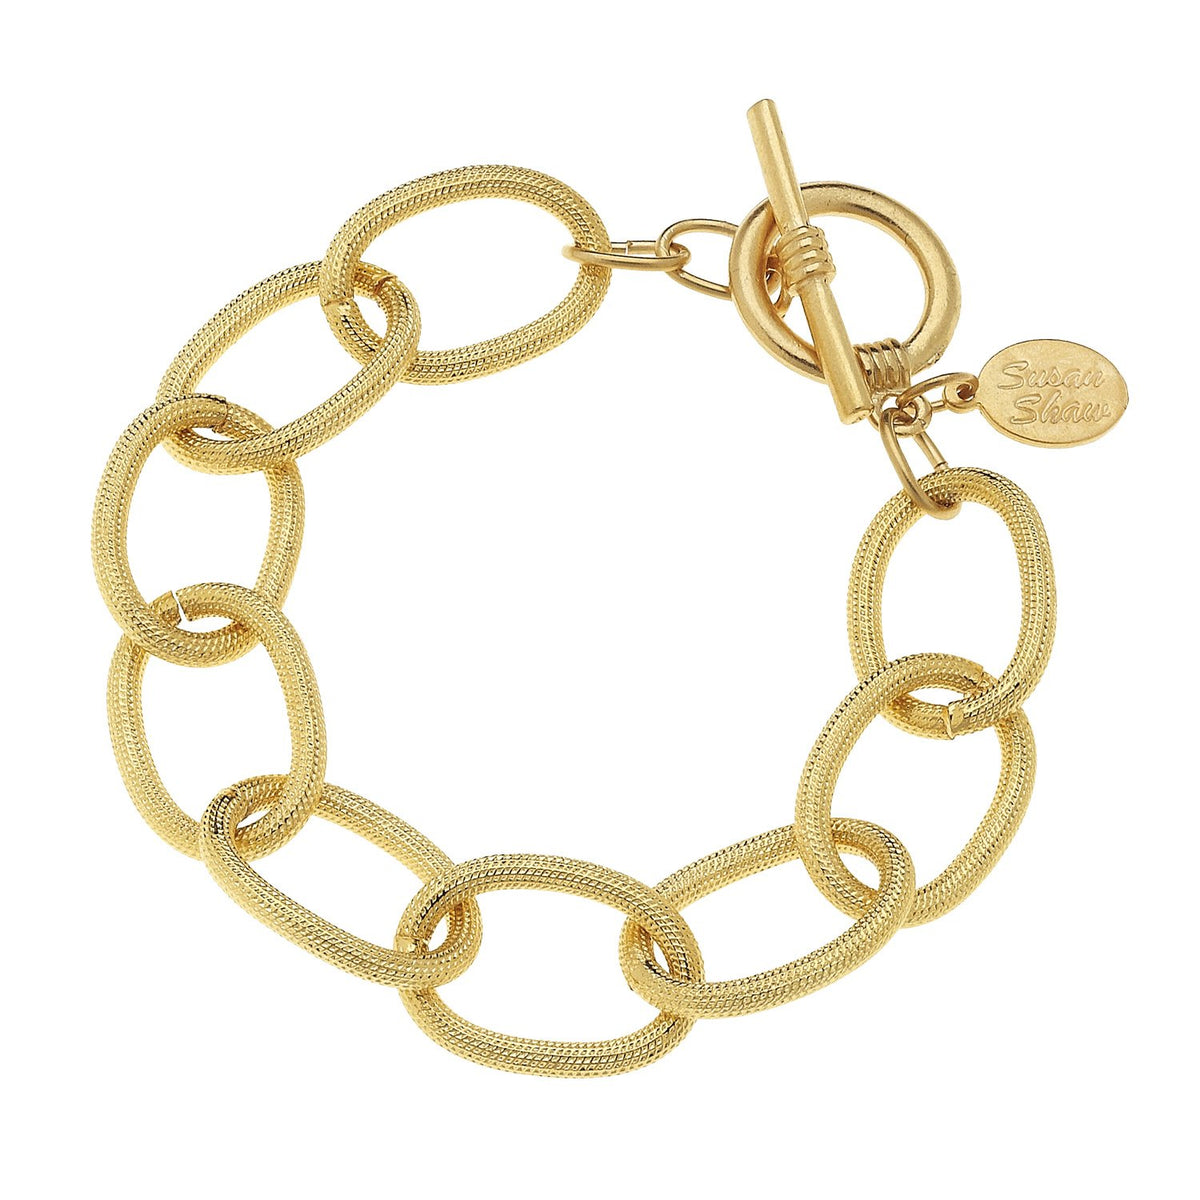  Prasacco 12 Pcs Bracelet Chains for Jewelry Making